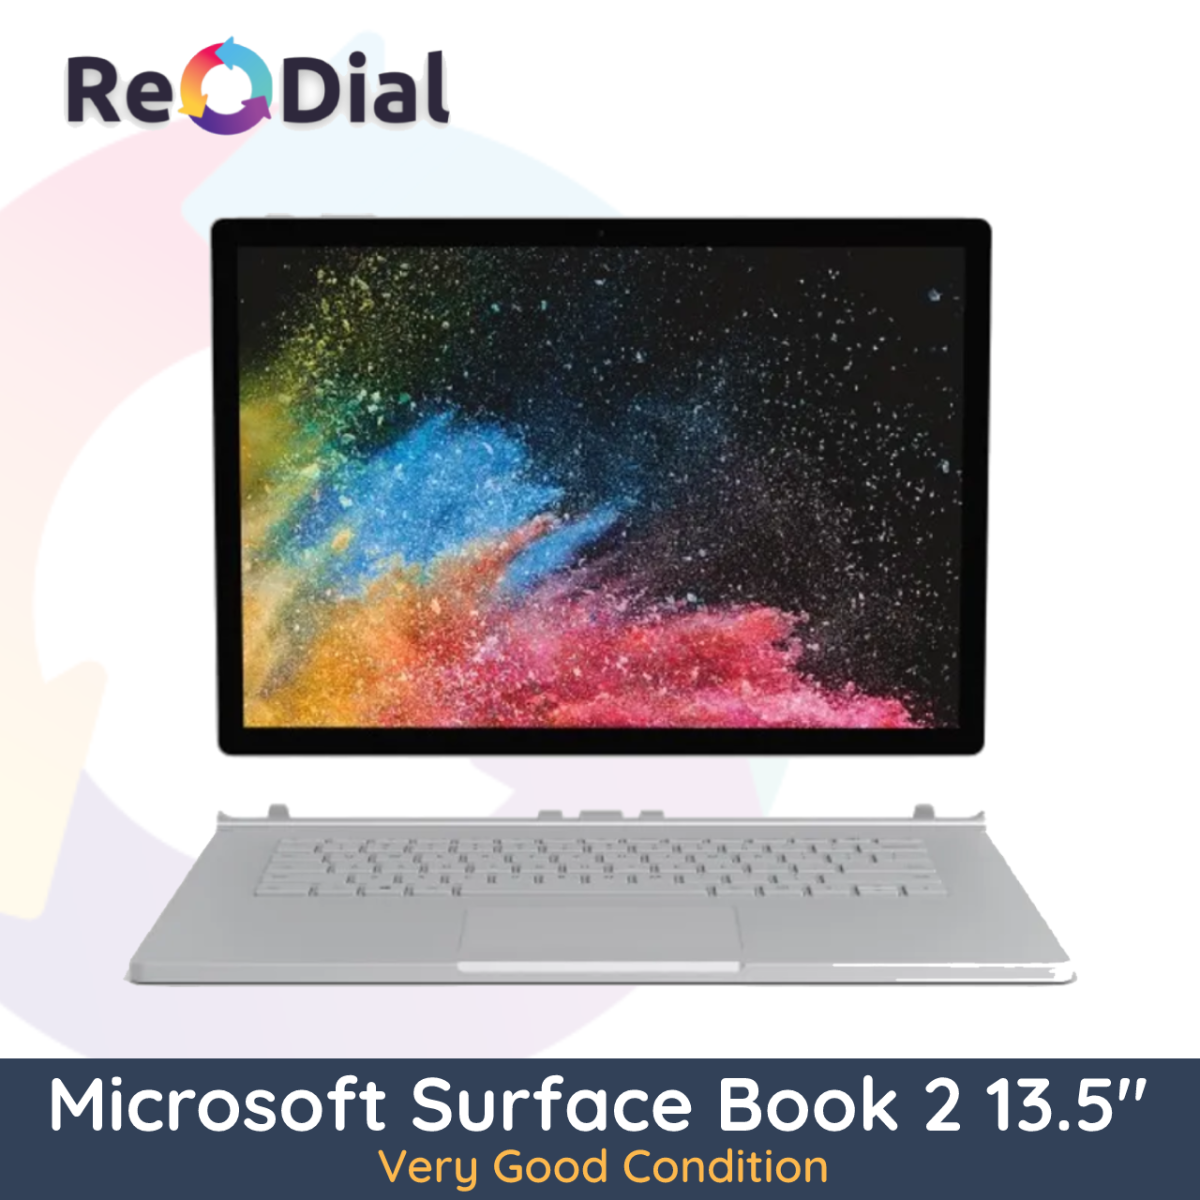 Microsoft Surface Book 2 13.5" Laptop Intel Core i5 256GB 8GB RAM - Very Good Condition